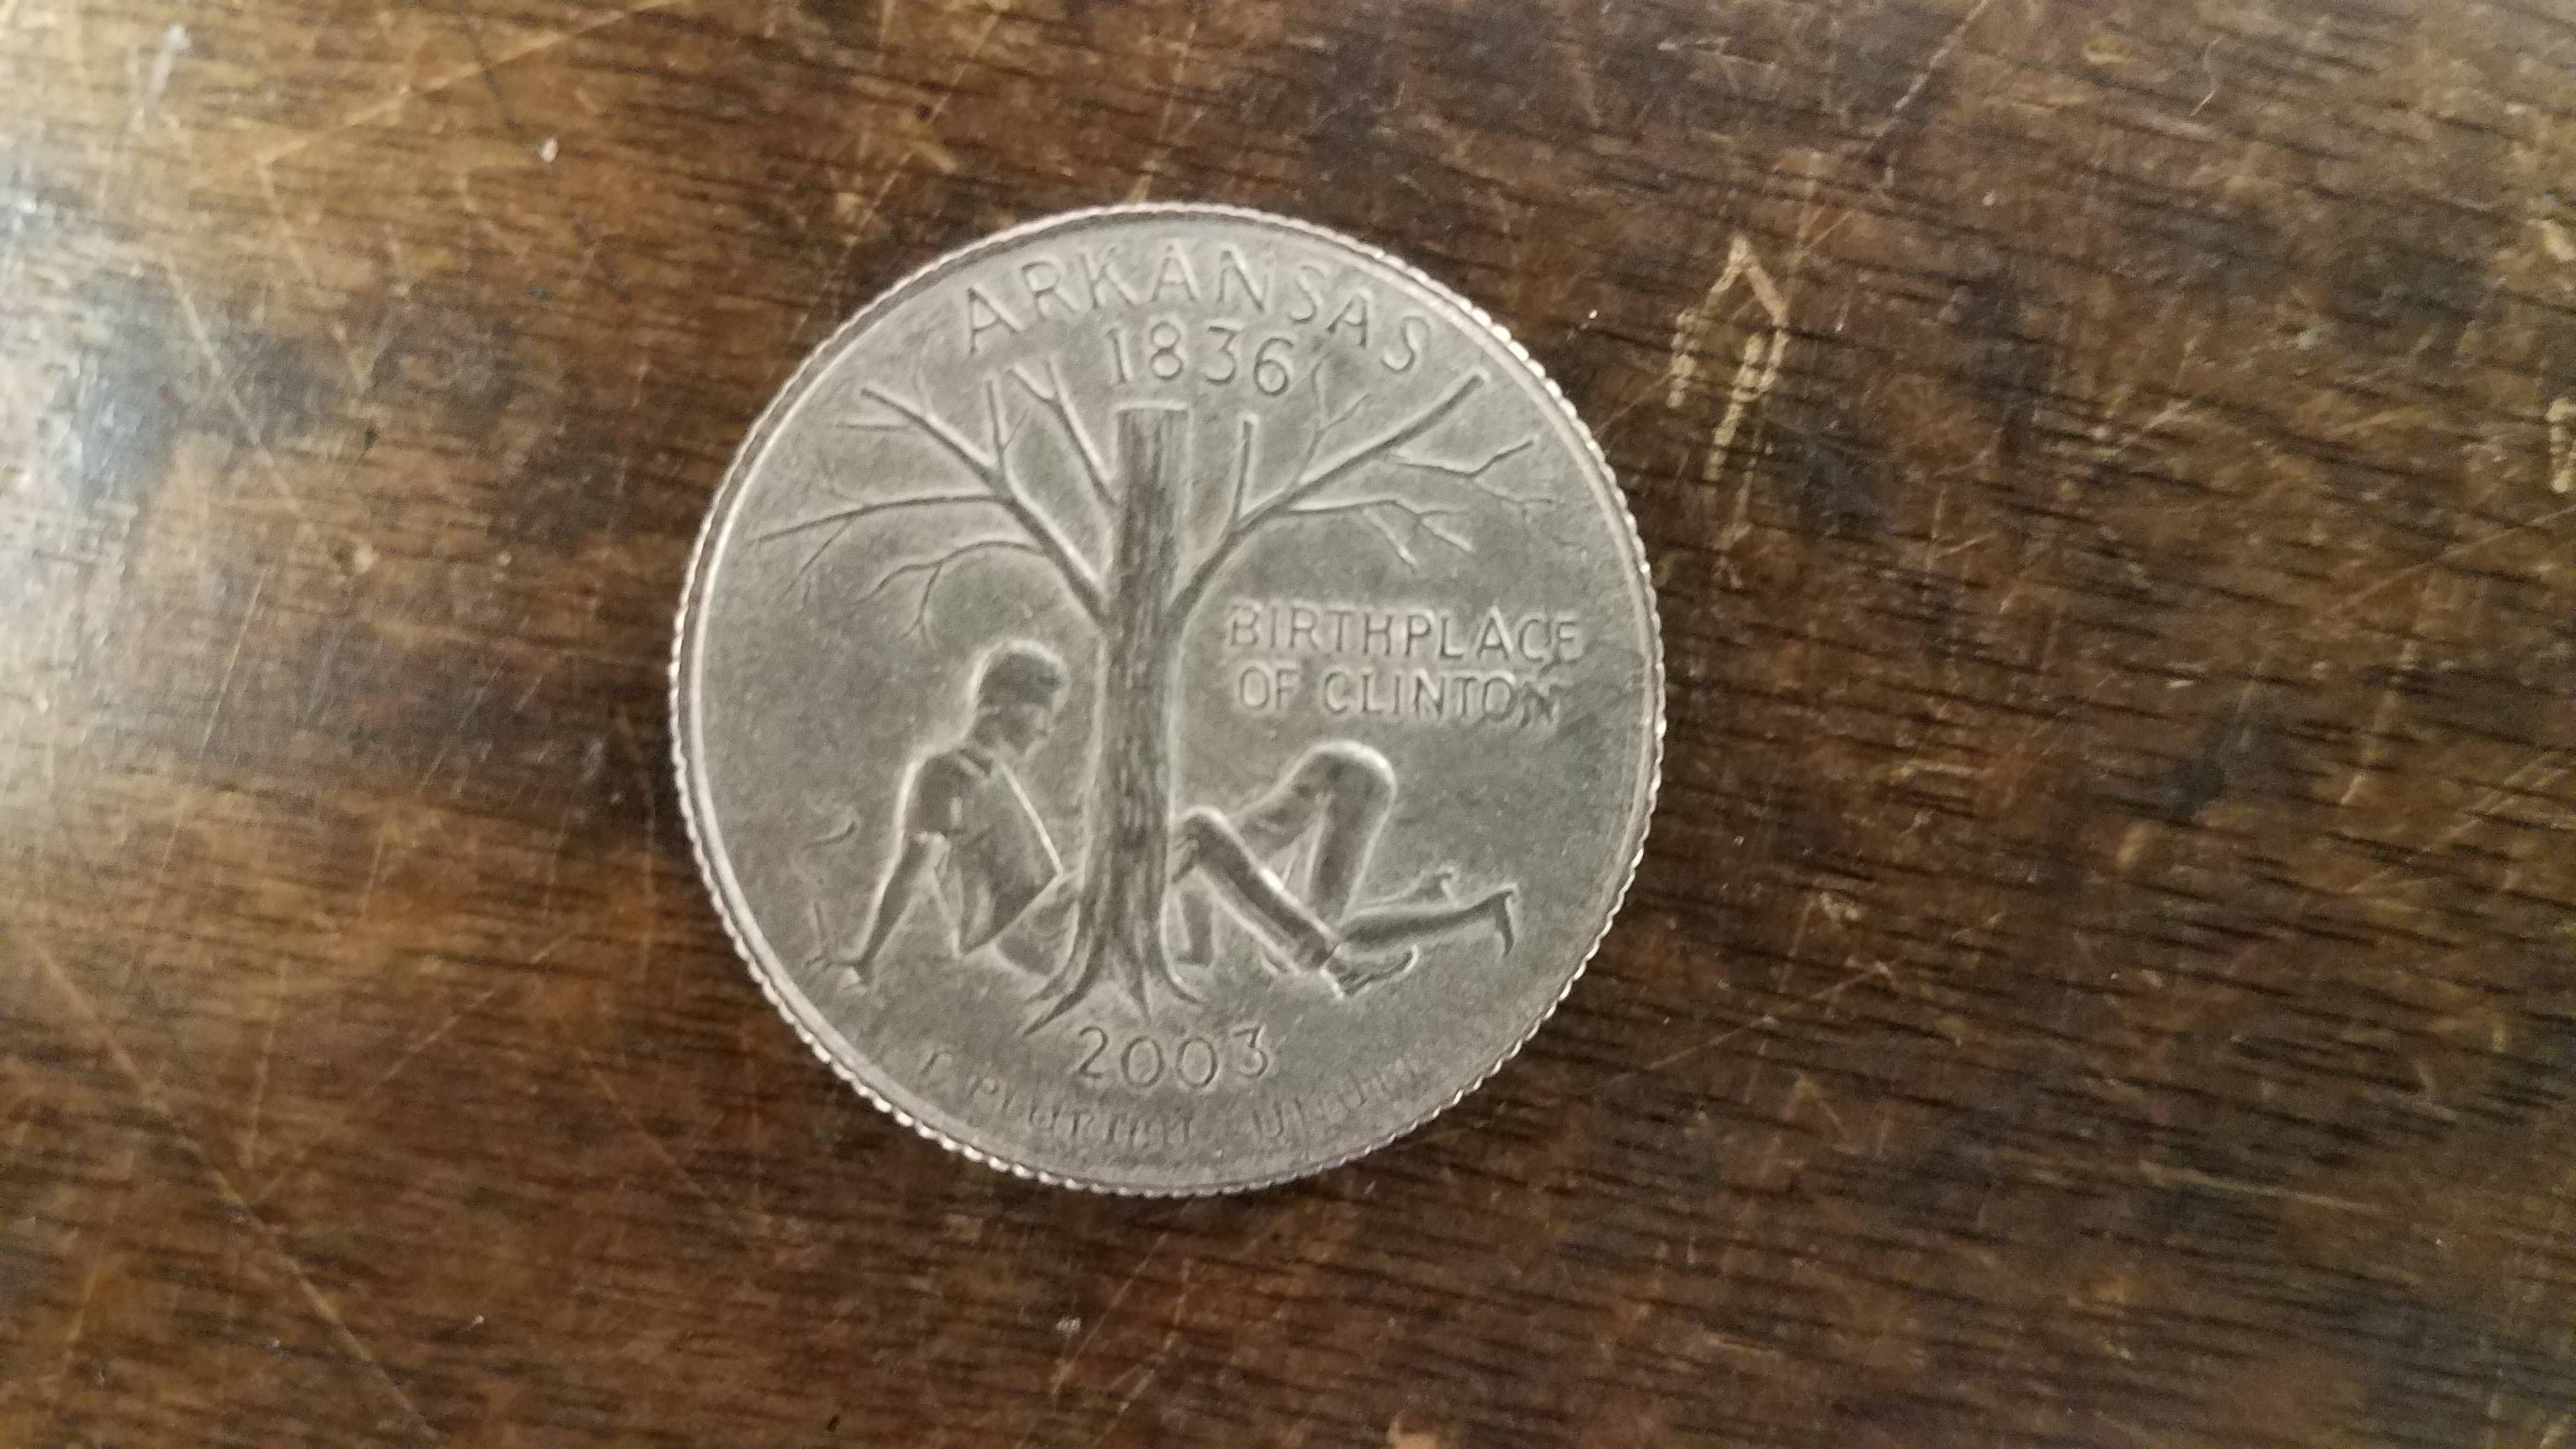 Someone passed this fake quarter at work today.